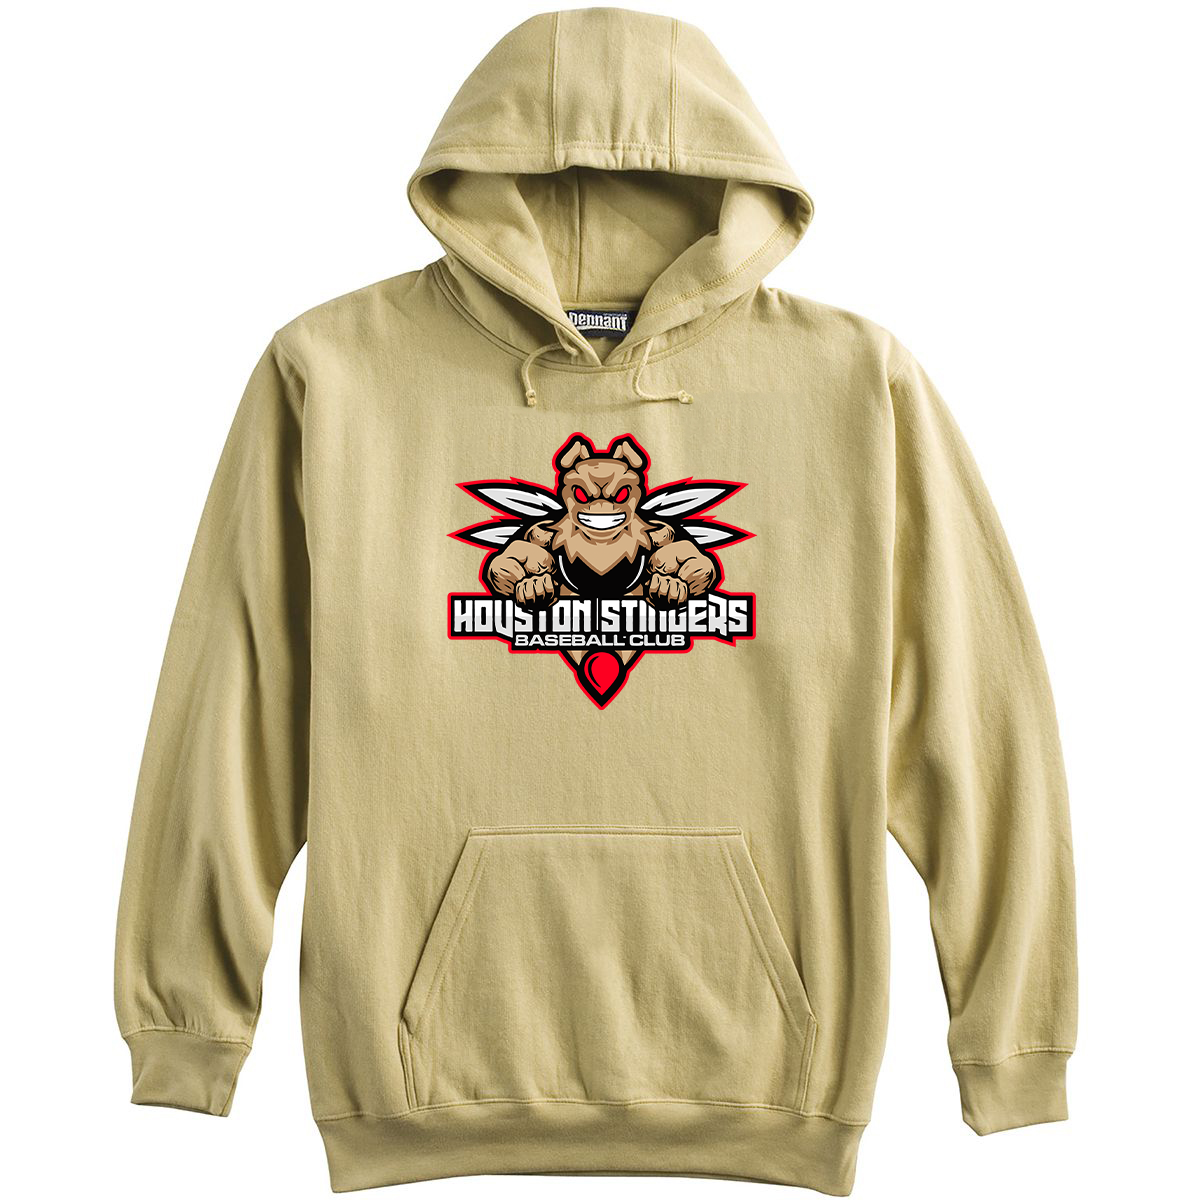 Houston Stingers Baseball Club Sweatshirt